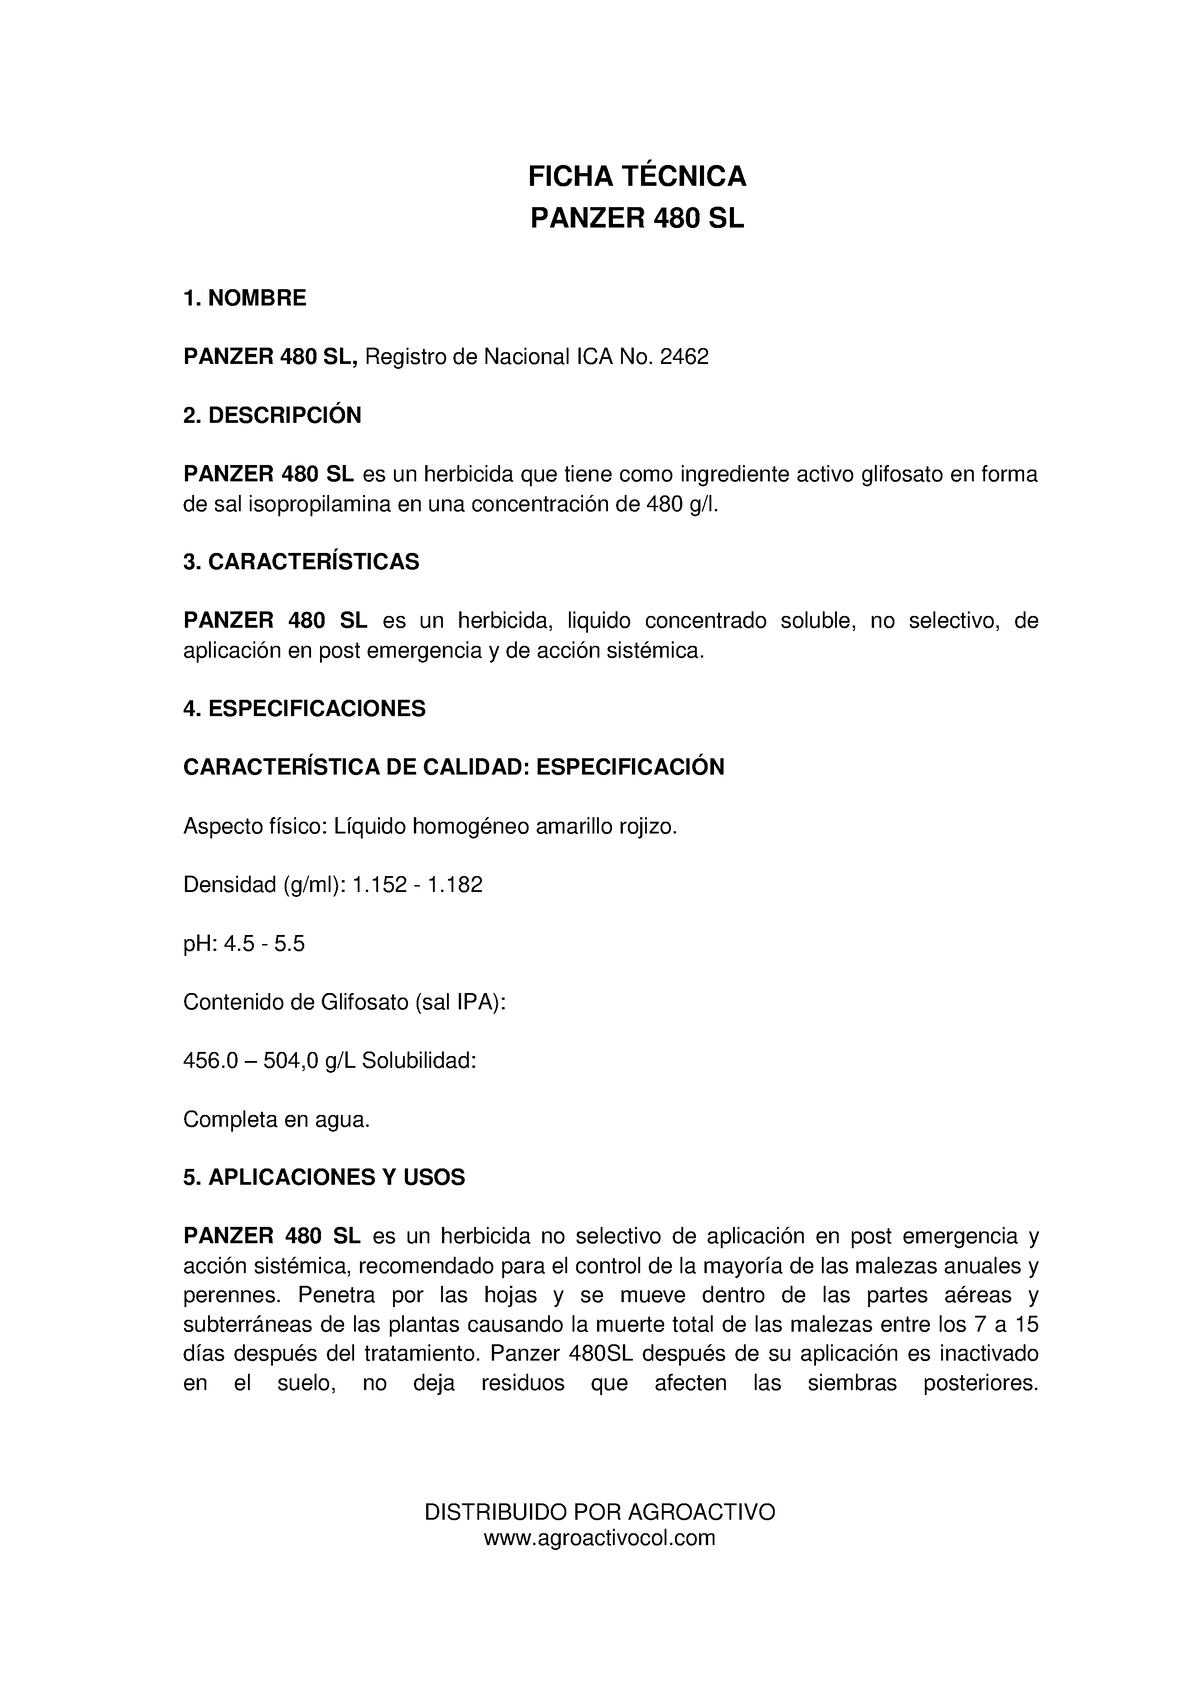 HERBICIDA GLIFOSATO PANZER 480 SL NO SELECTIVO > Agroactivo